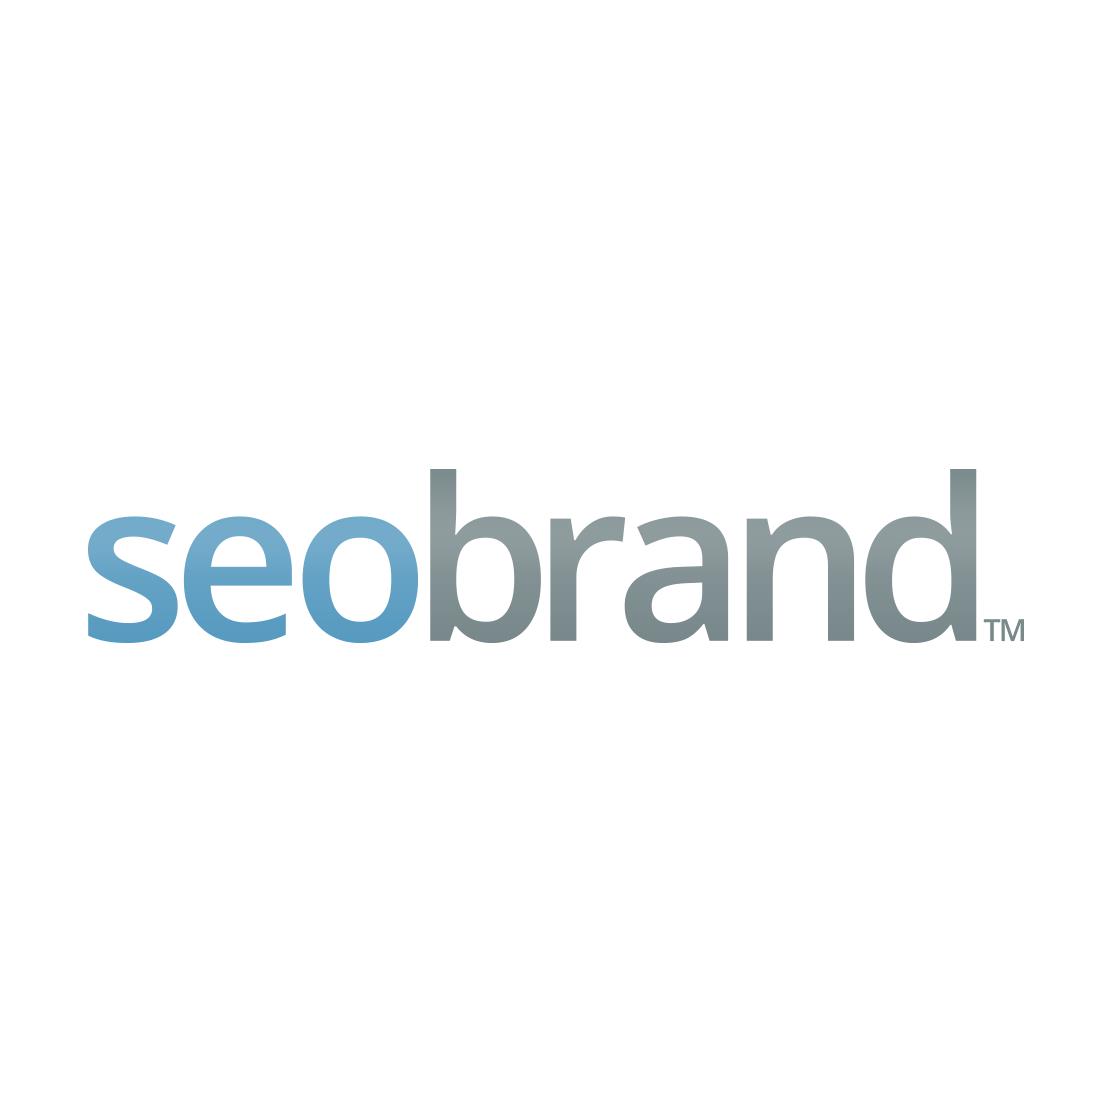 Top Online Marketing Firm Logo: SEO Brand